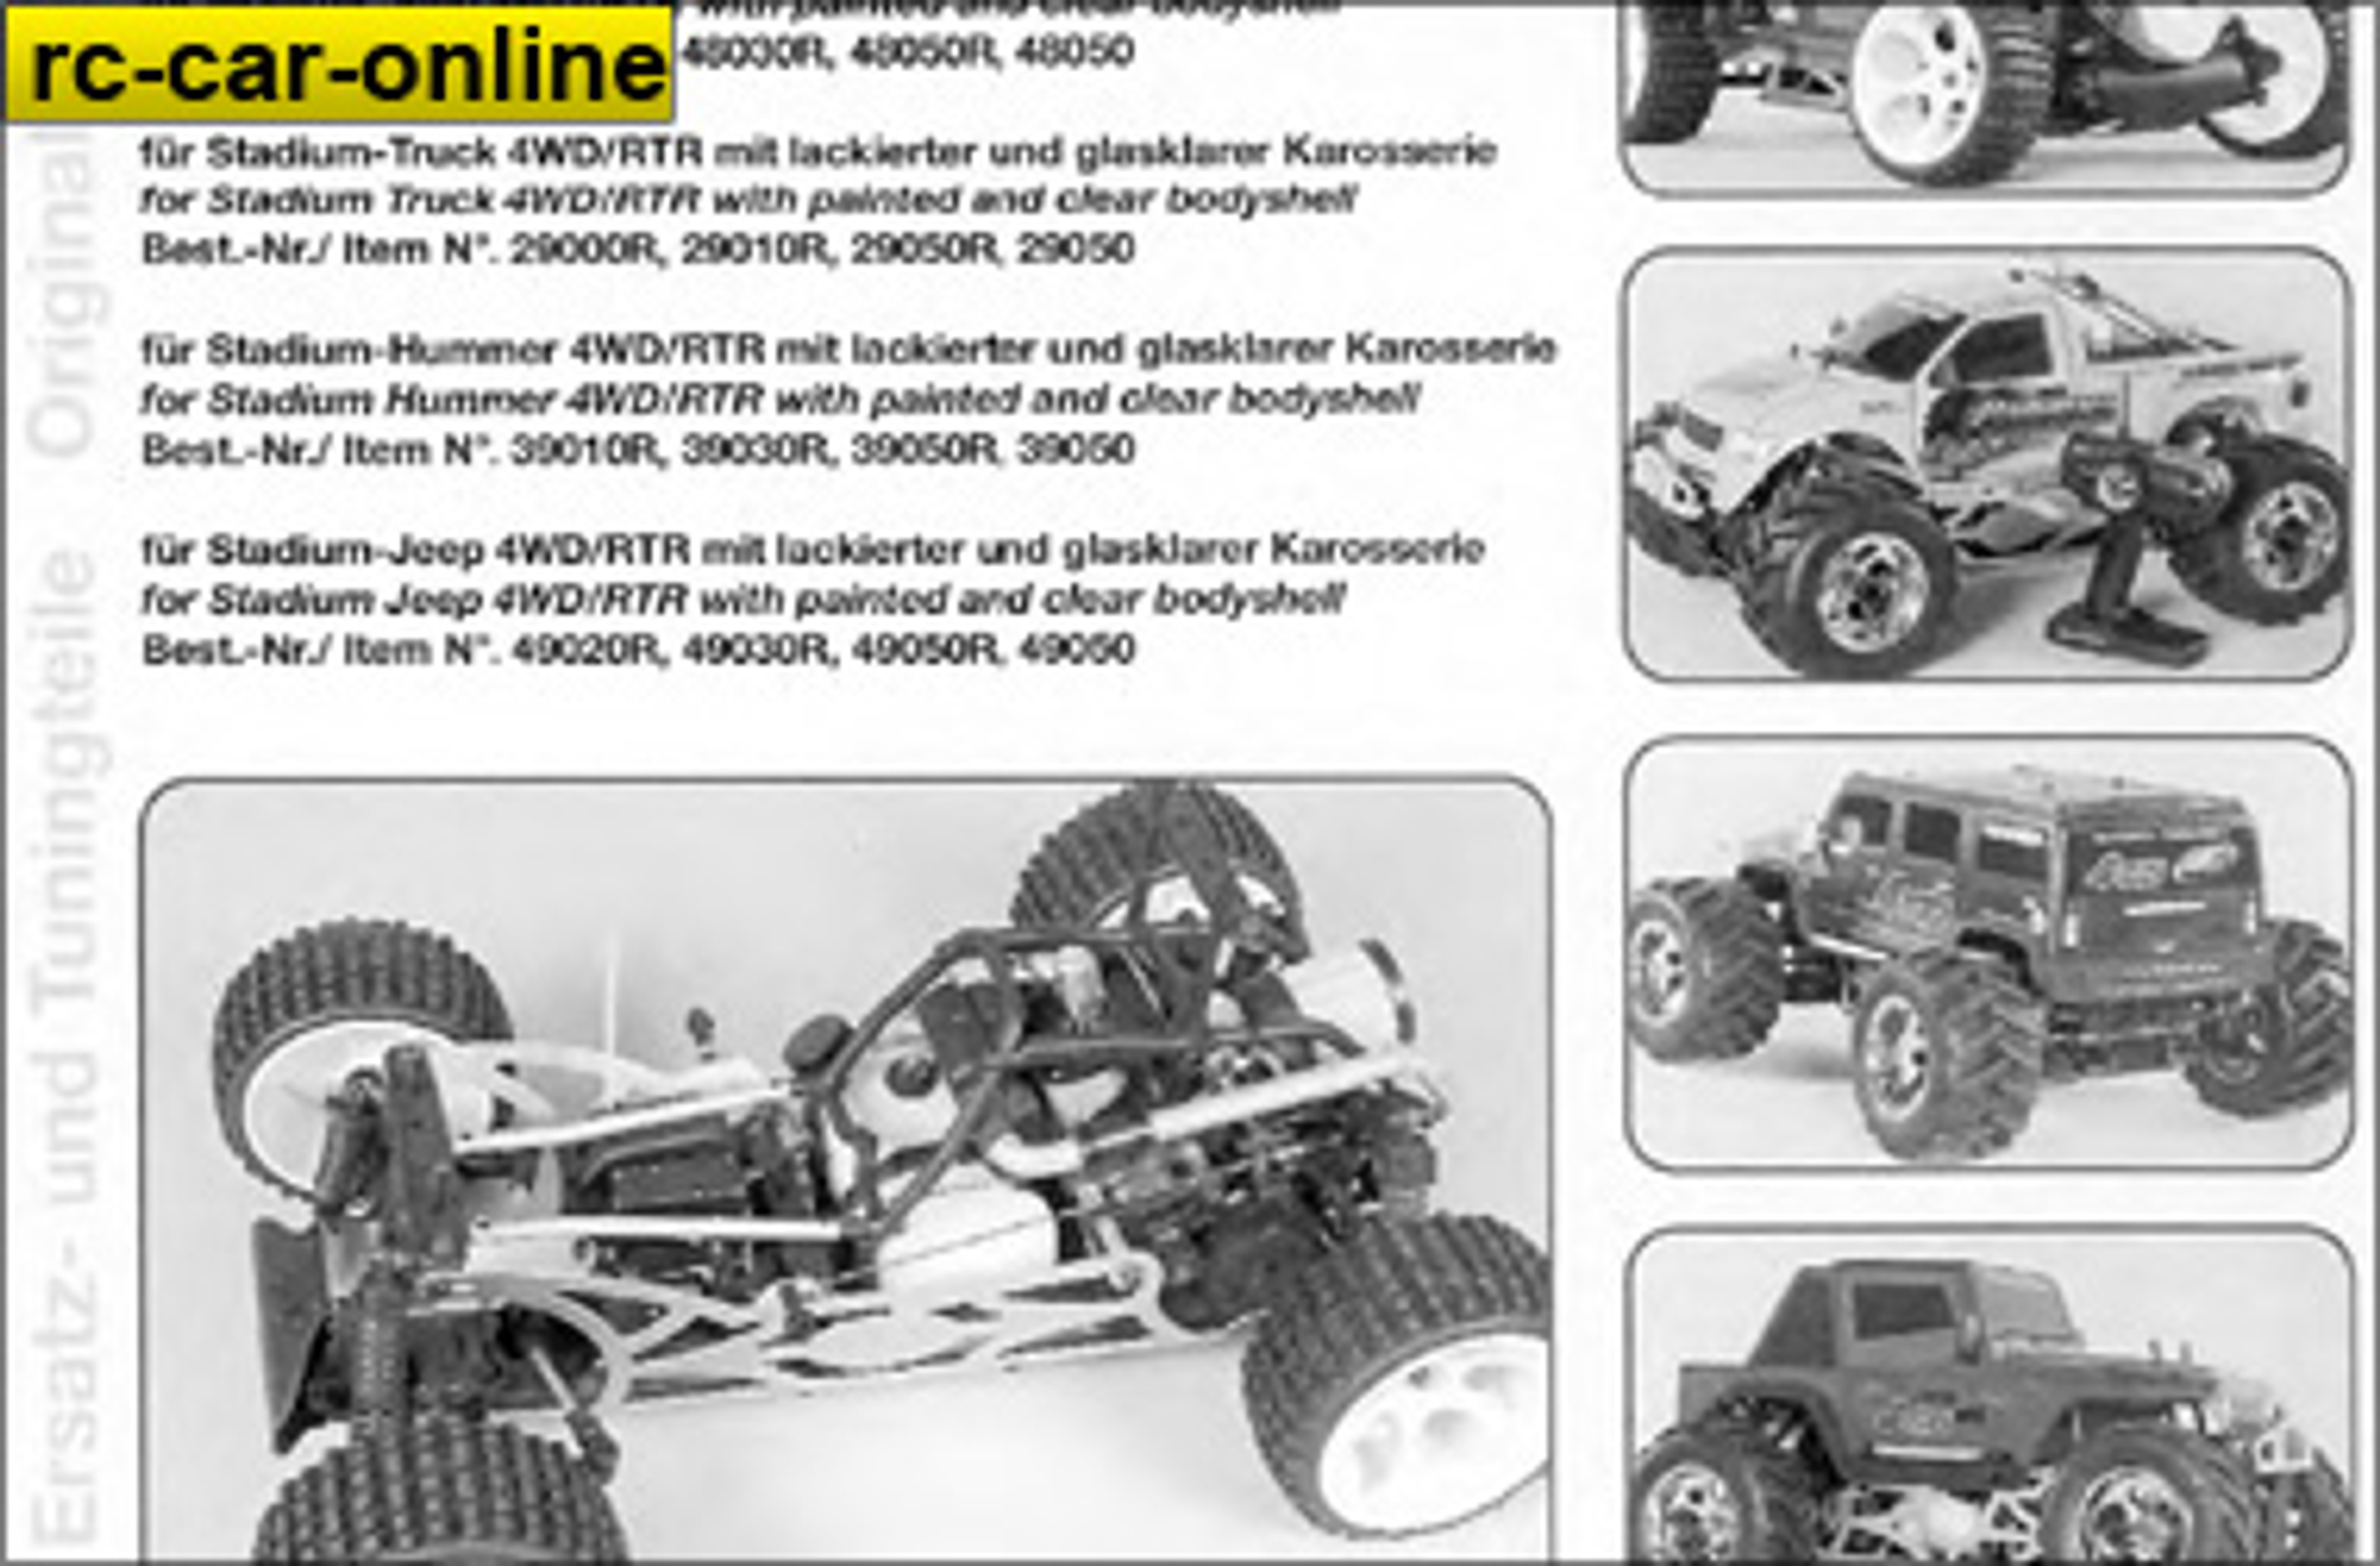 y0961/01 FG manuals for Beetle/Monster Sportsline 4WD, 1 St.